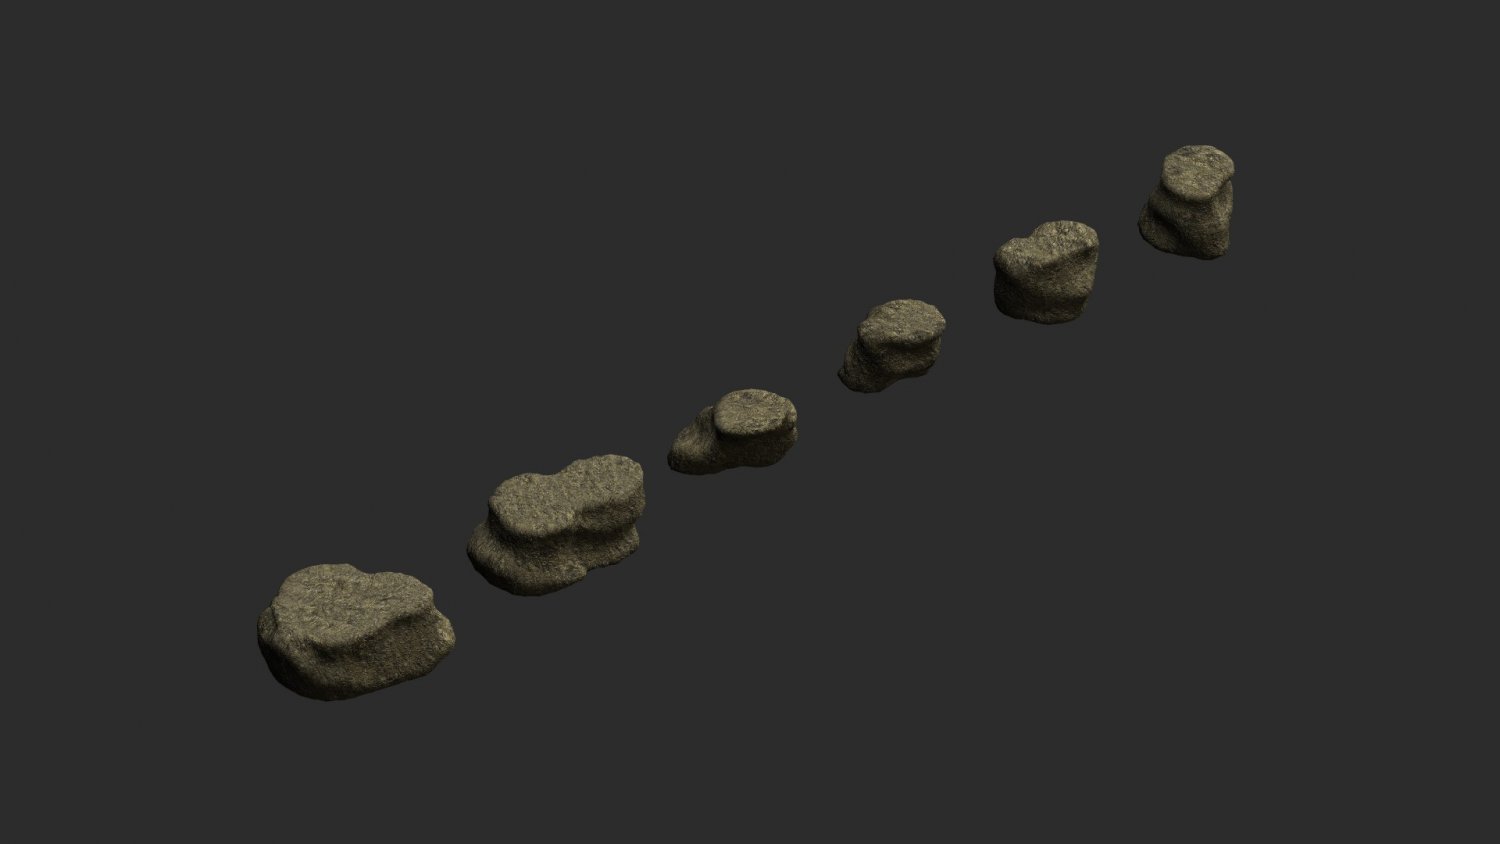 Short Flat Rocks - Dirt Low-poly 3D Model